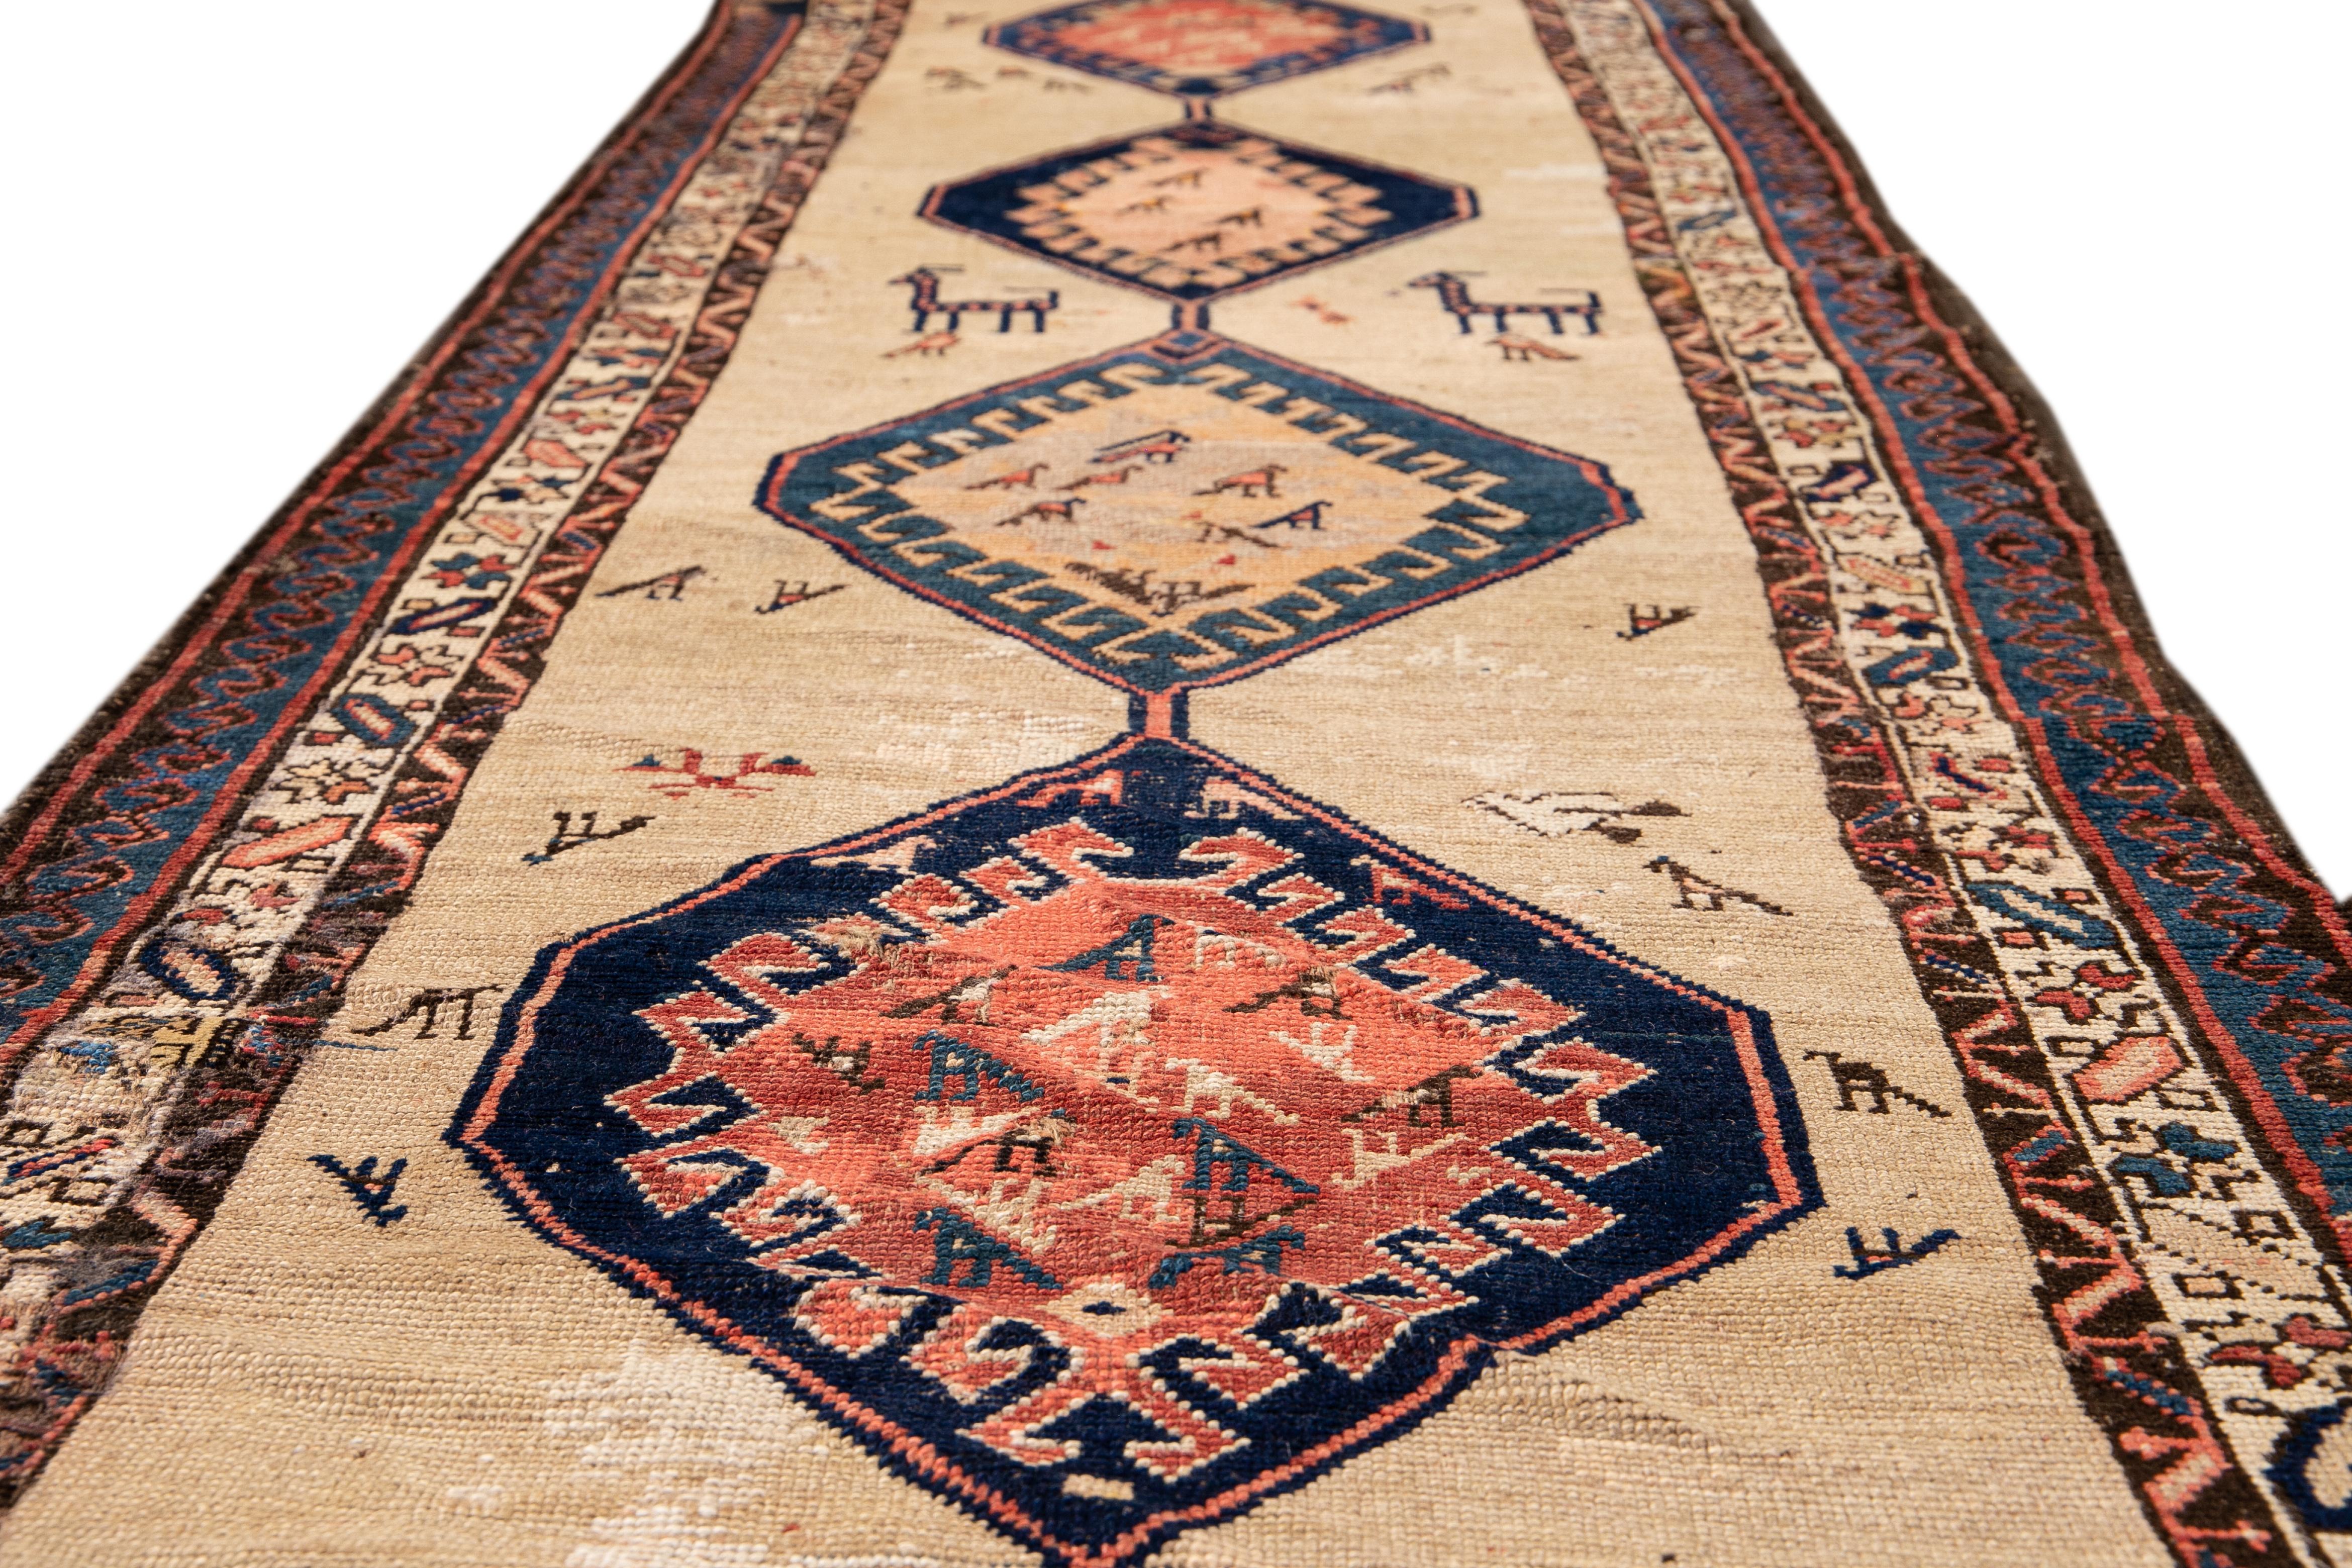 Islamic Antique Persian Serab Beige and Blue Handmade Mendallion Wool Rug For Sale